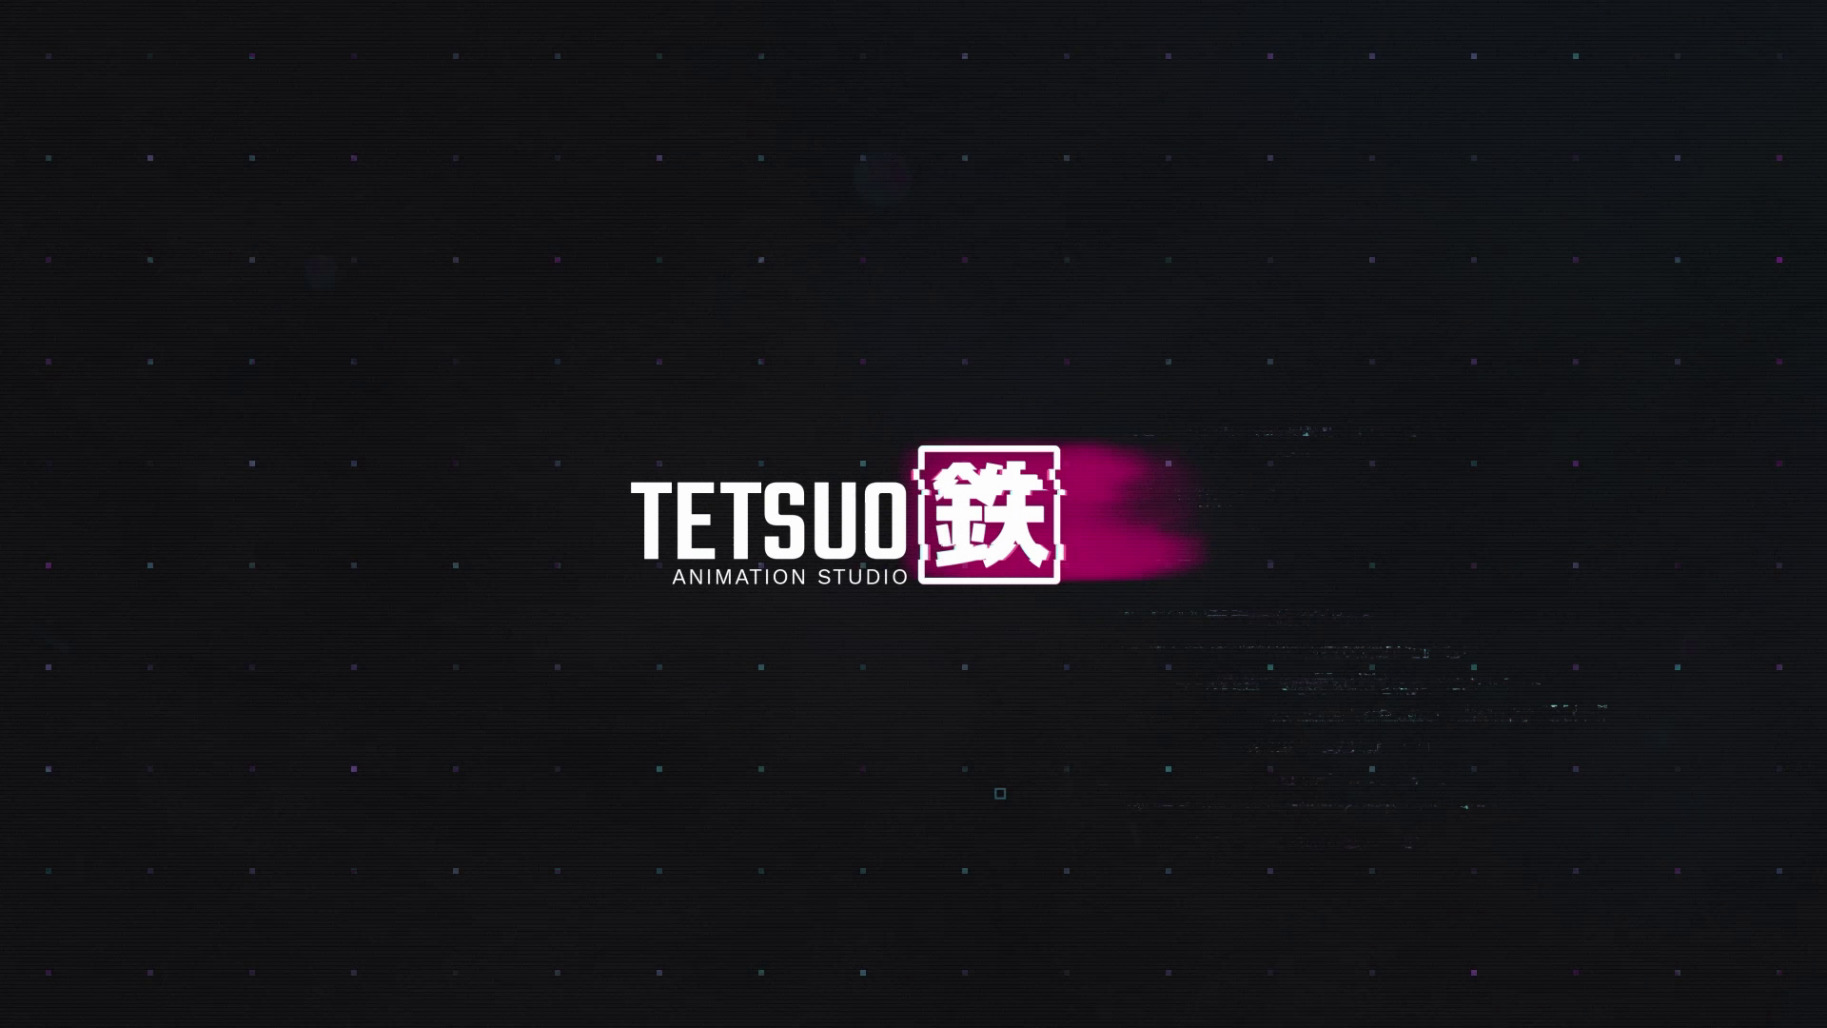 Tetsuo Animation Studio Logo - Captivating 3D Character Animation